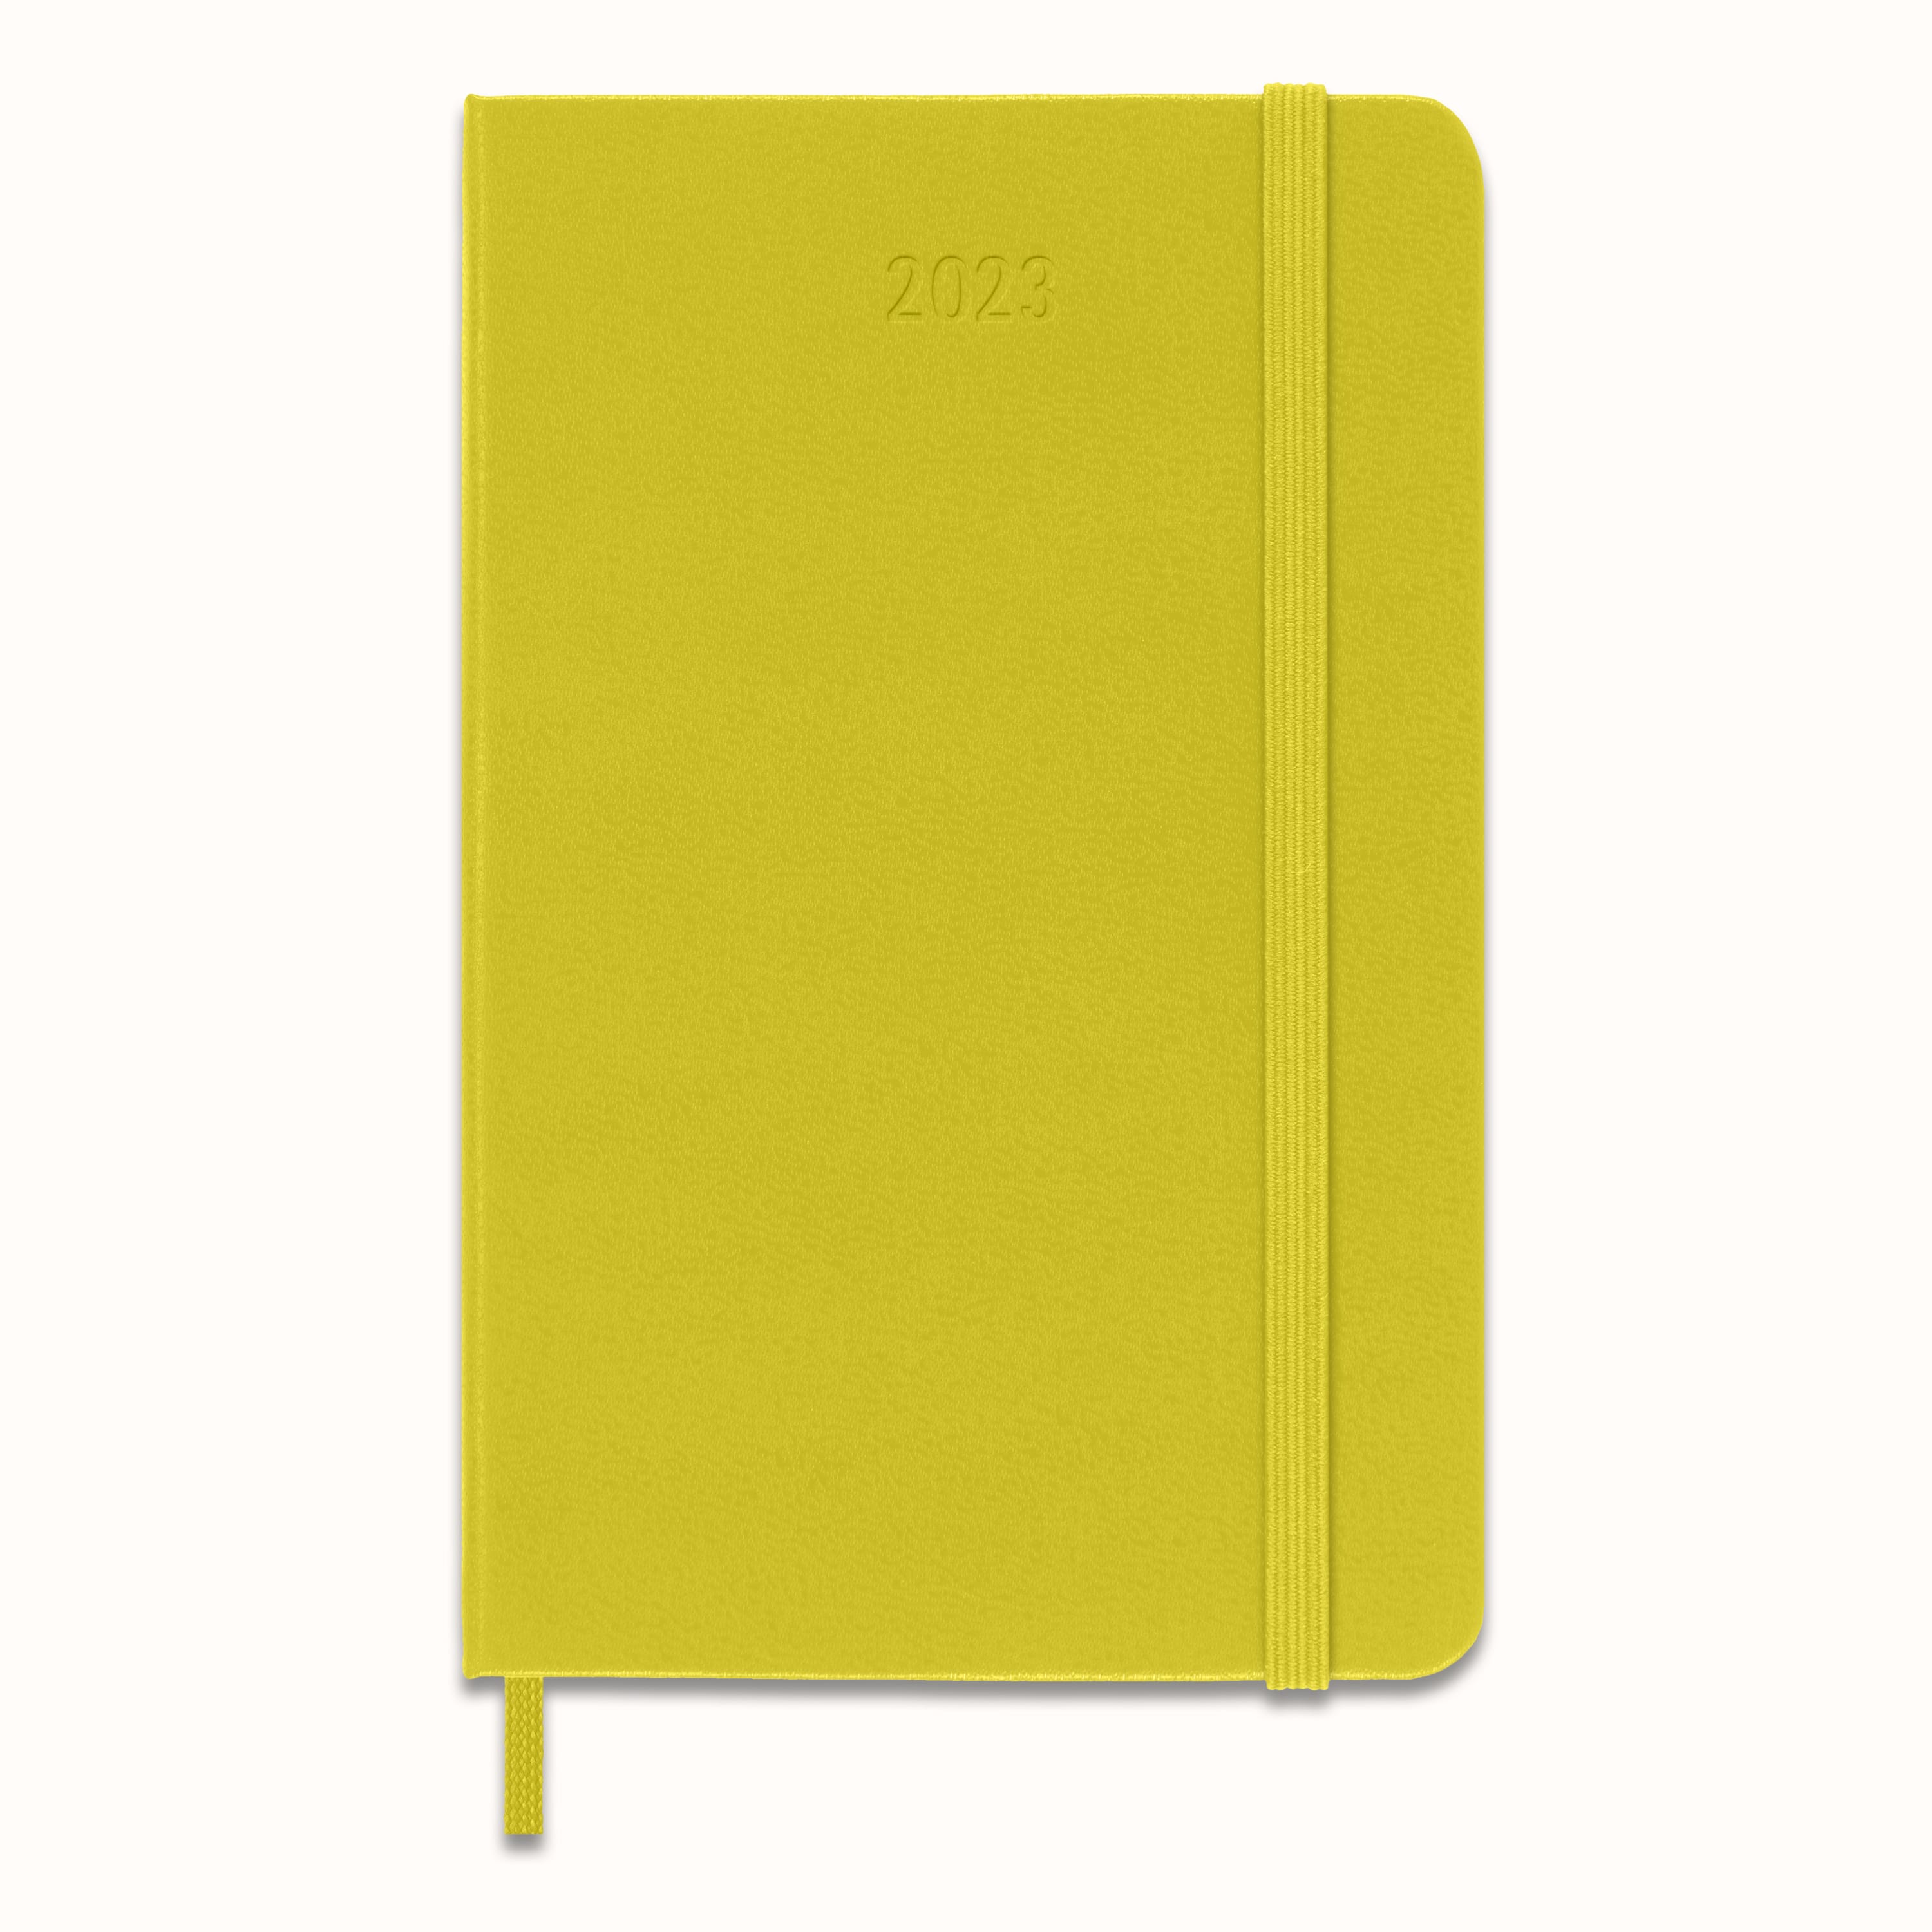 Moleskine 2023 Weekly Notebook Planner, 12M, Large, Orange Yellow, Hard (5  x 8.25) (Calendar)